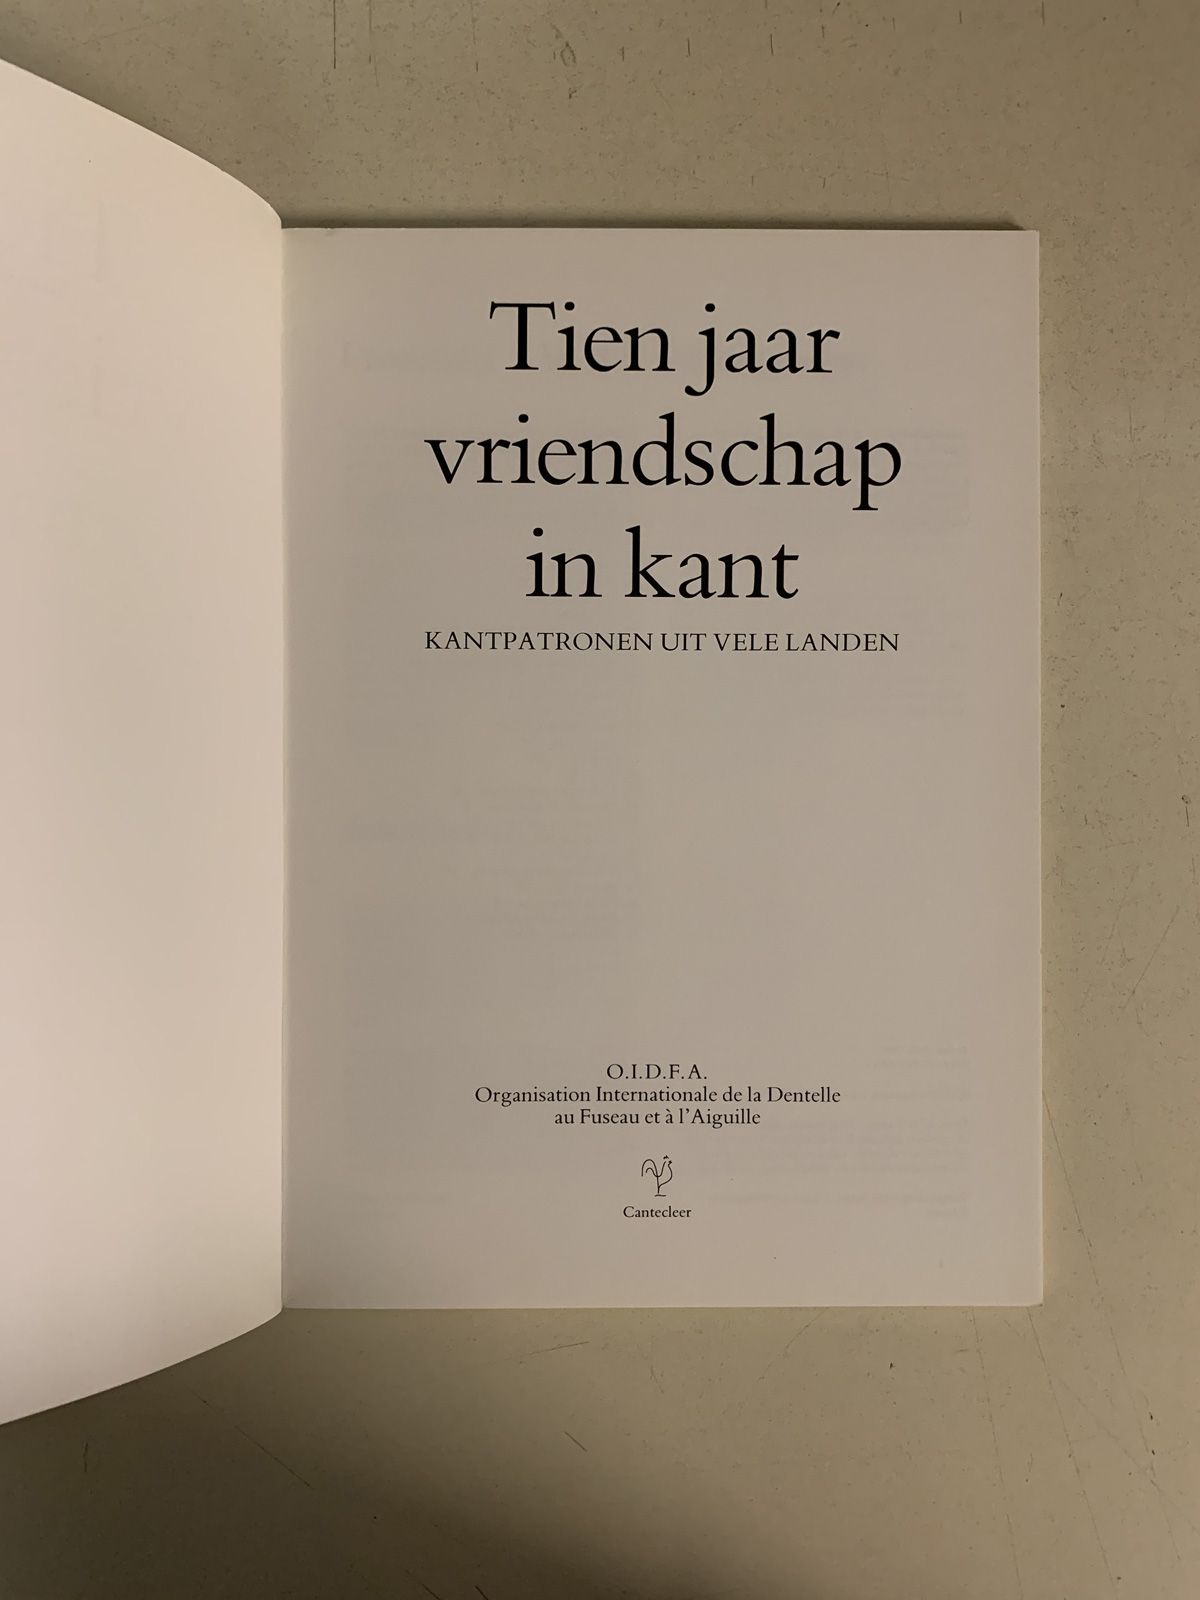 Null 五本关于花边技术的荷兰语书籍。
关于各种技术或花边历史的荷兰语书籍或小册子，包括Stéphane Vandenberghe先生和Frida Sorbe&hellip;